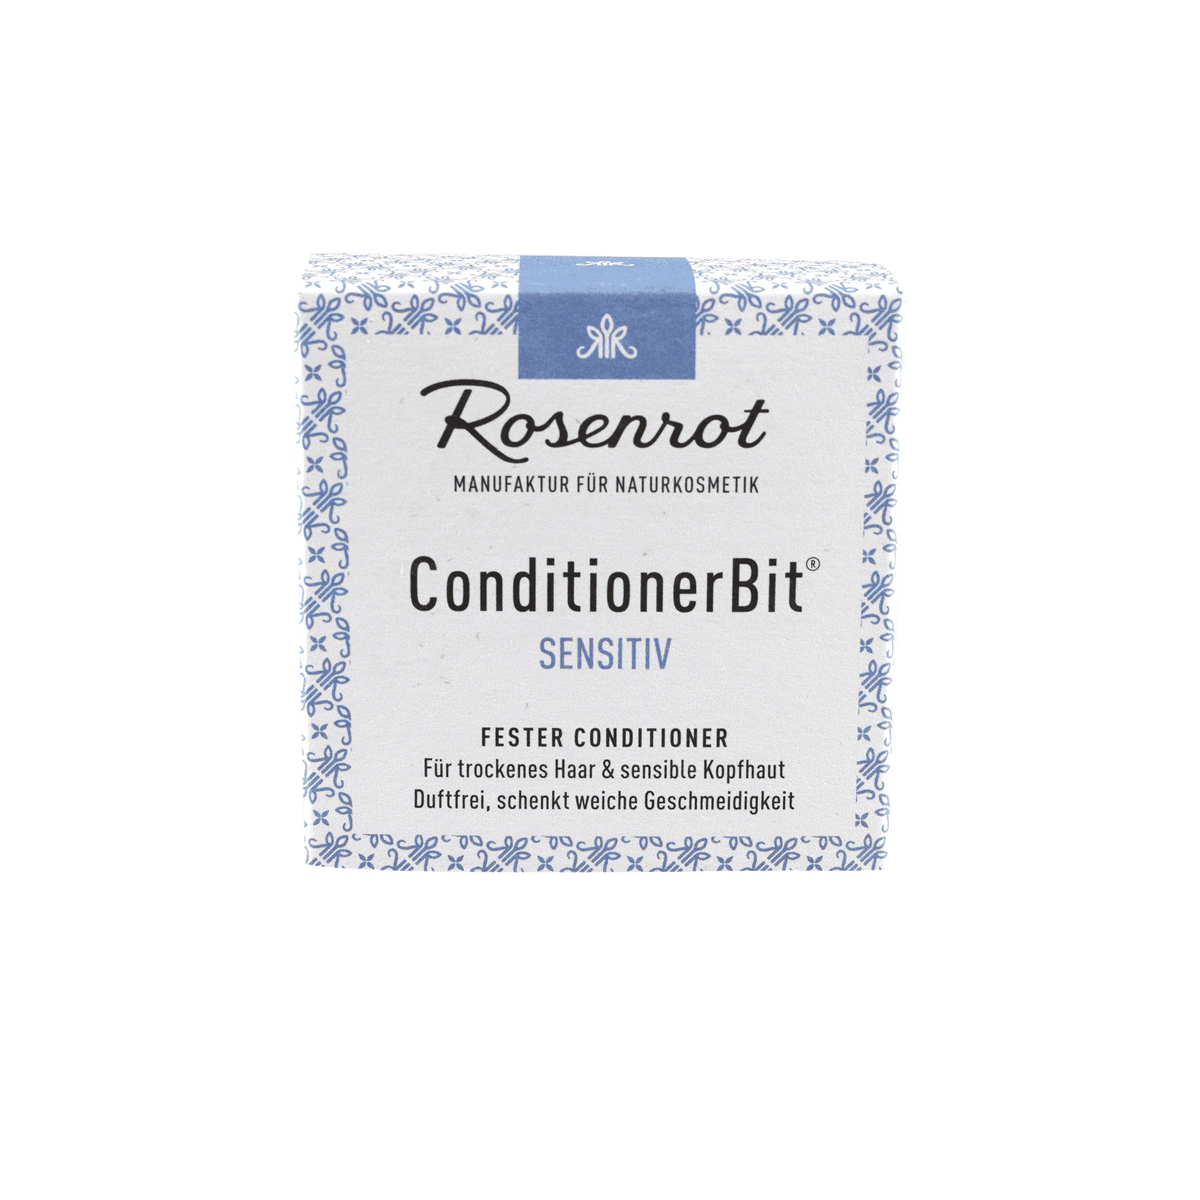 Rosenrot-naturkosmetik-feste-Conditioner-sensitiv-duftfrei-plastikfrei-nachhaltig